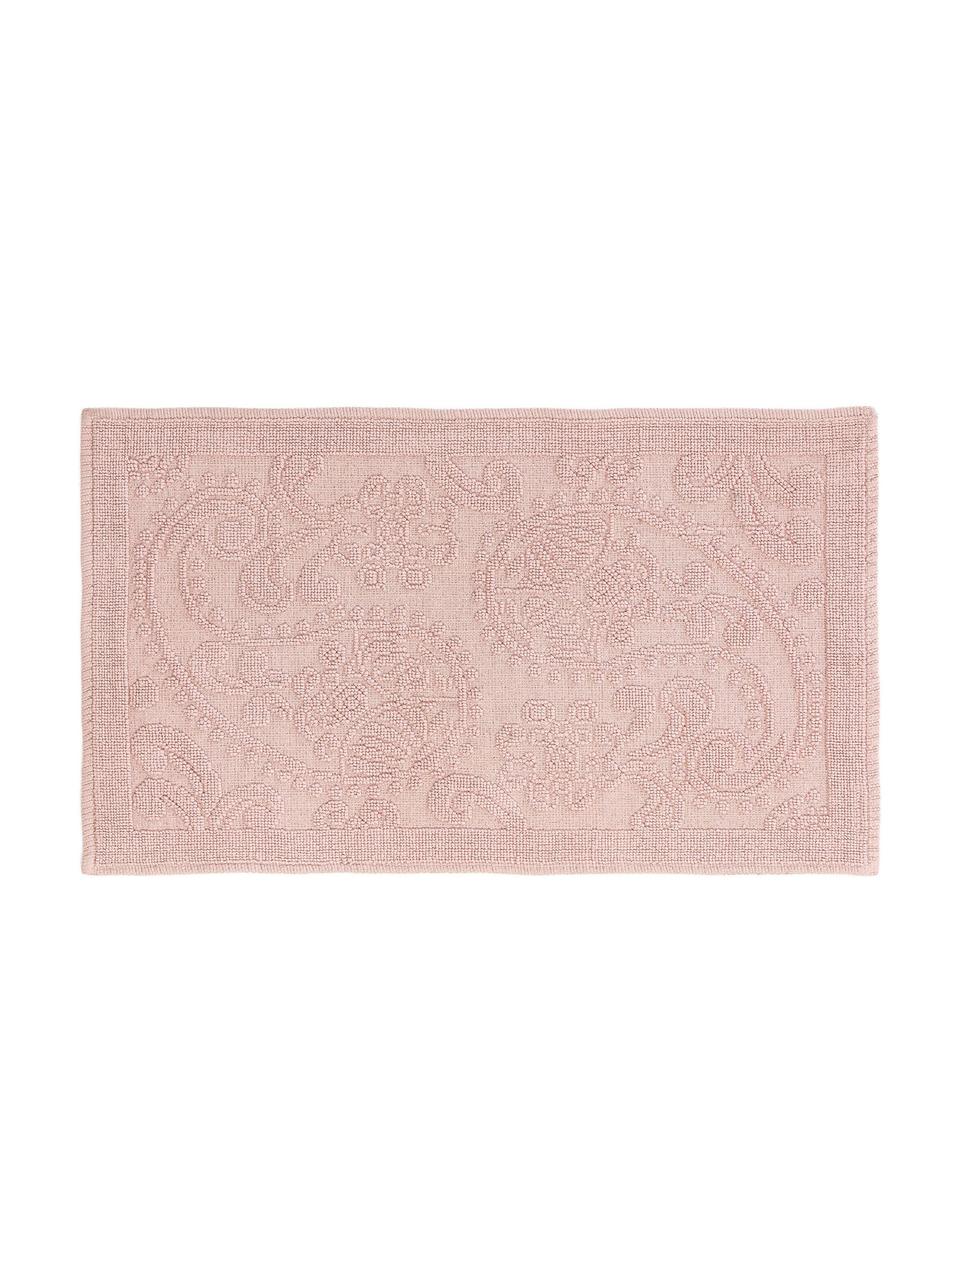 Badvorleger Kaya in Rosa mit floralem Muster, 100% Baumwolle, Rosa, 50 x 80 cm